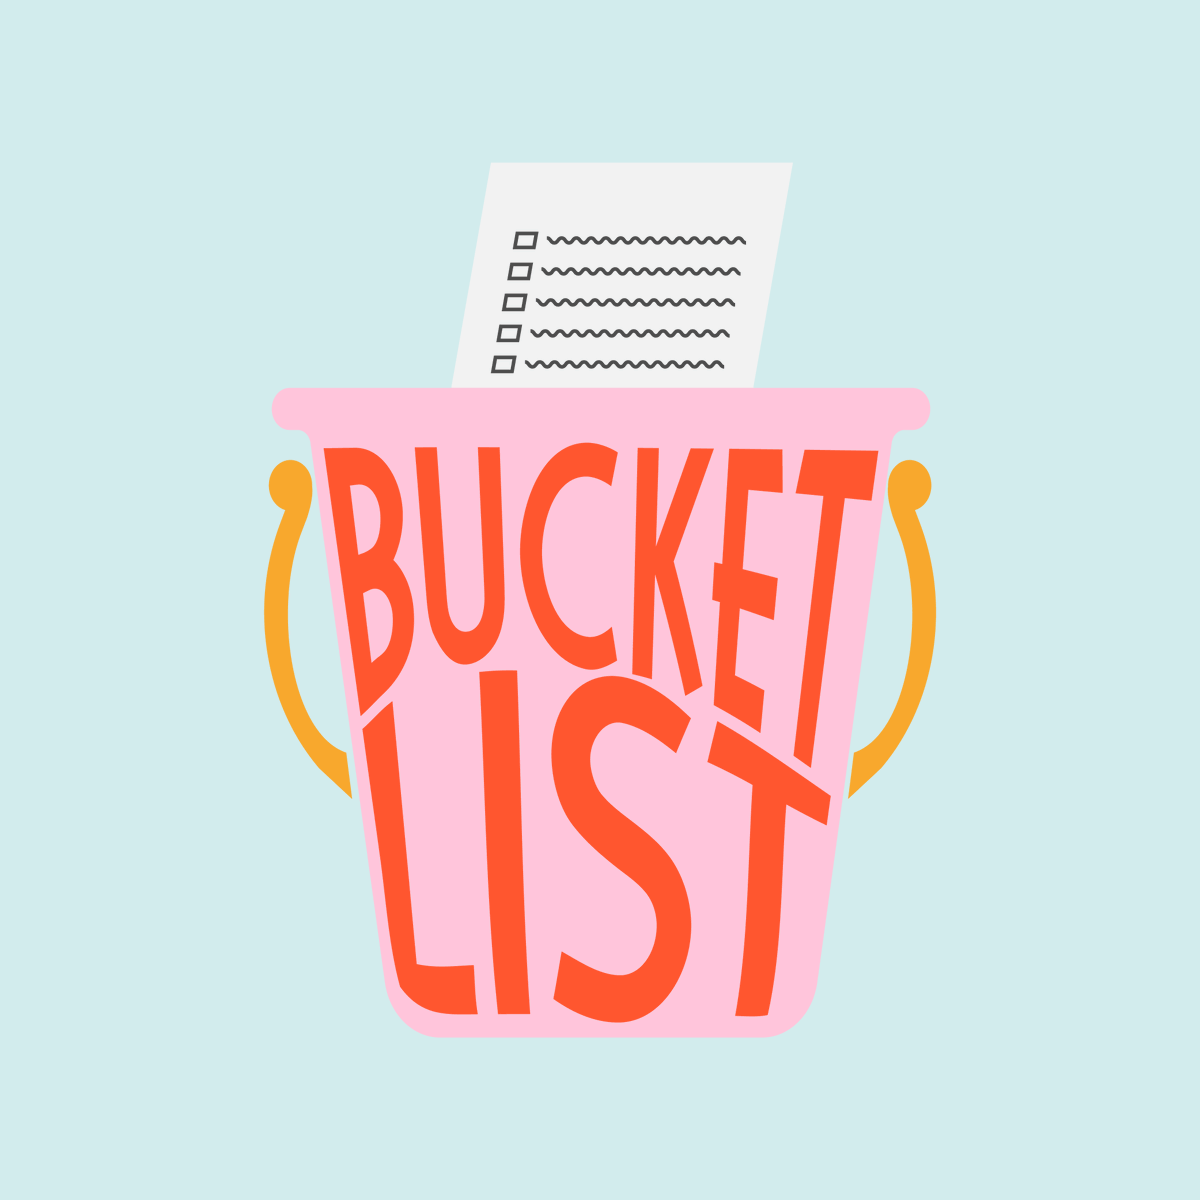 What's on your summer bucket list? #BucketList
#AlignRightRealty #daytonabeach #realestate #buyahome #sellahome #ormondbeach #portorange #volusia #florida #floridabeaches #davidwillink